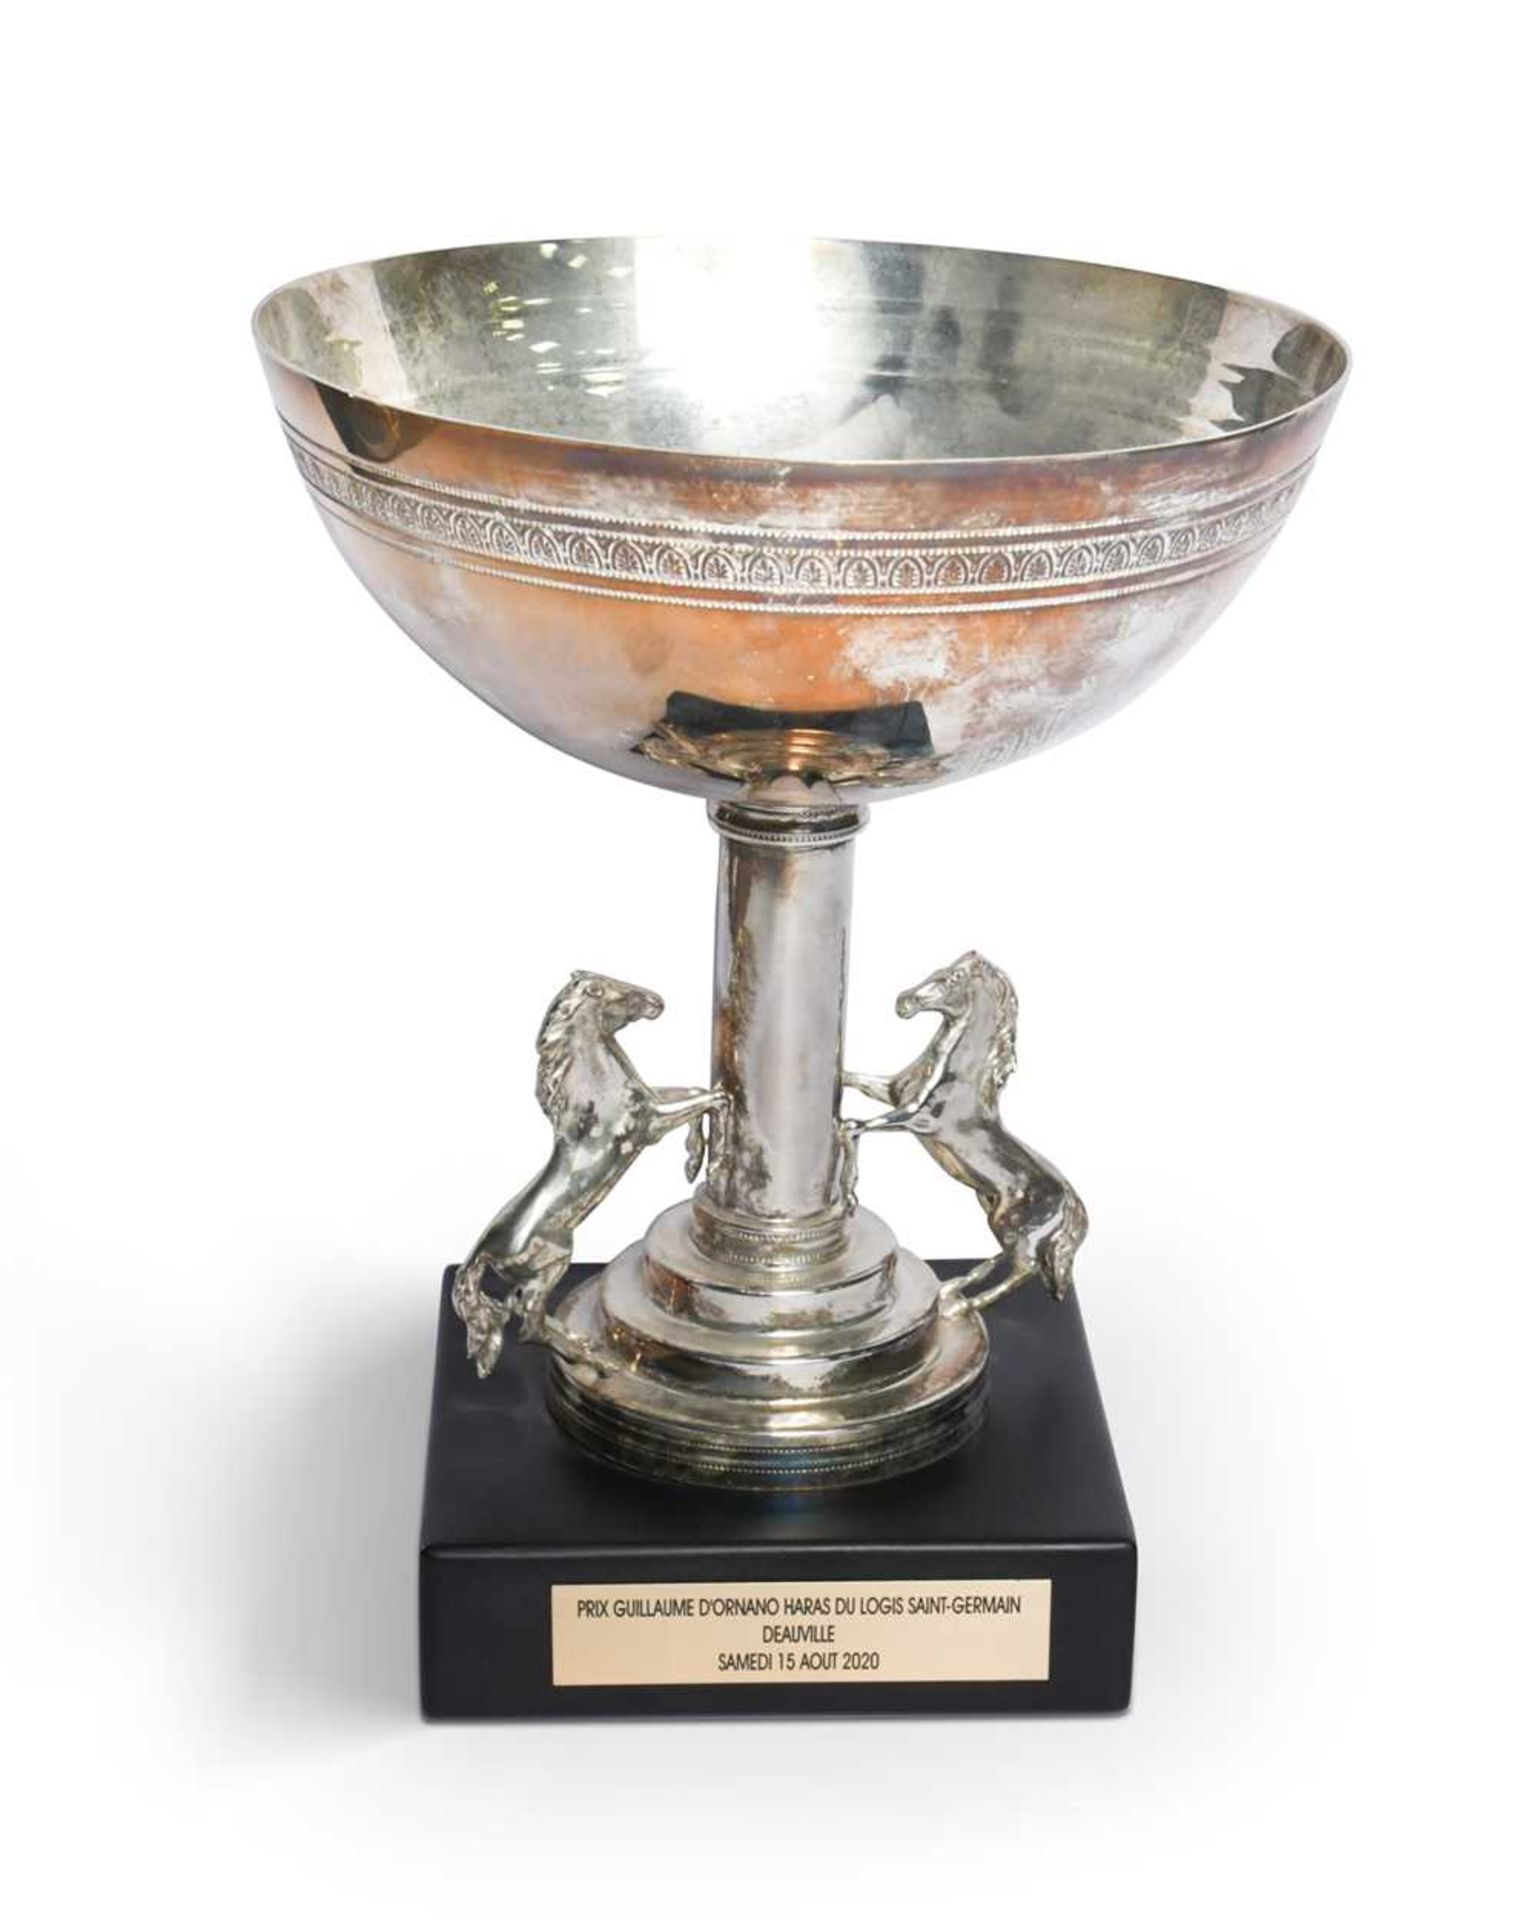 A Prix Guillaume D'Ornano Haras du Logis Saint-Germain trophy, awarded to Frankie Dettori,